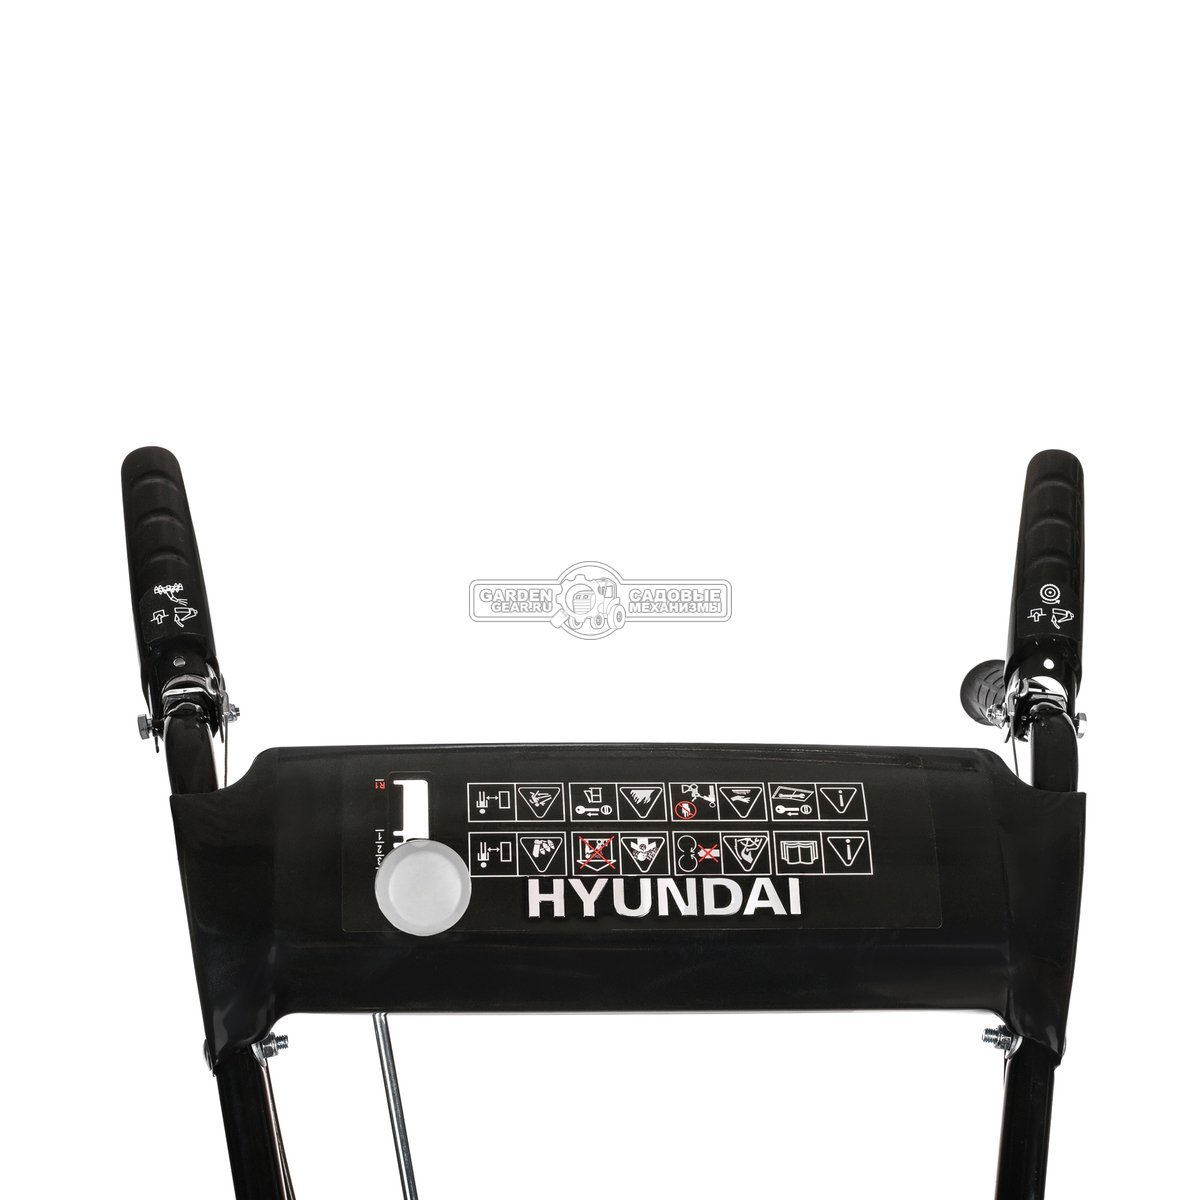 Снегоуборщик Hyundai S 5556 (PRC, 53 см, Hyundai, 196 см3, 4 вперед/1 назад, 57 кг)